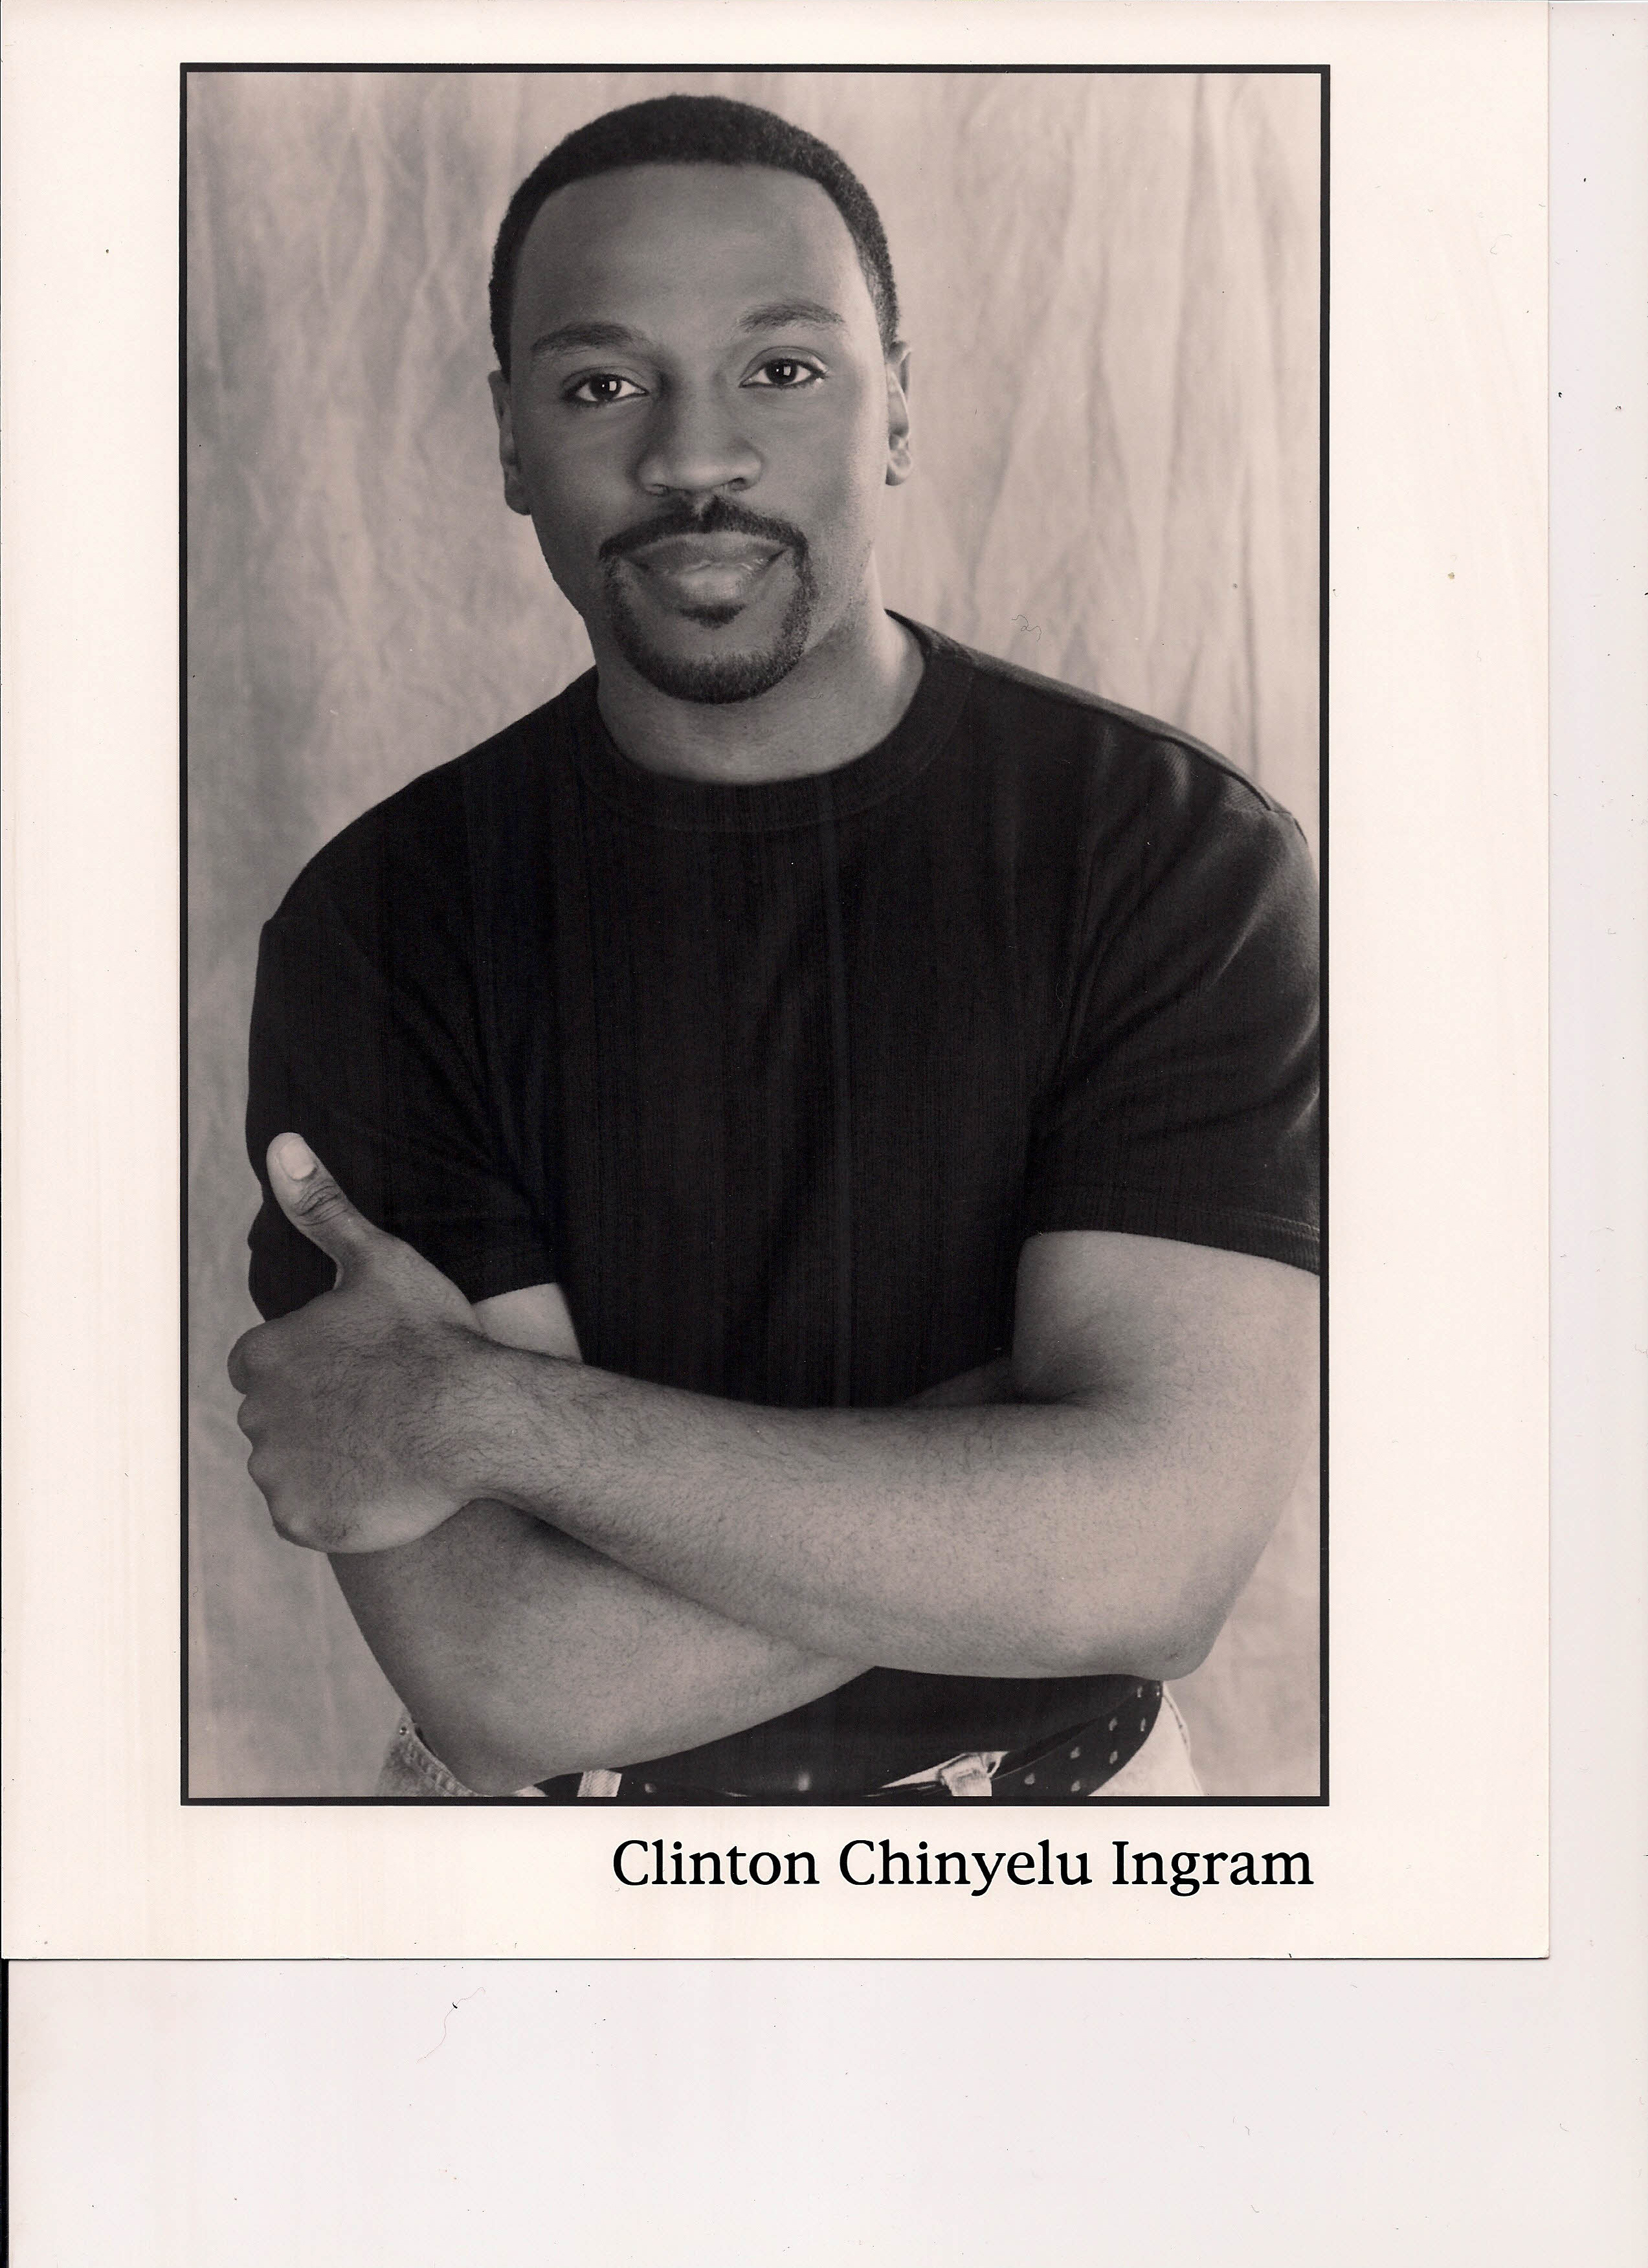 Actor/Singer/Musician Clinton Chinyelu Ingram